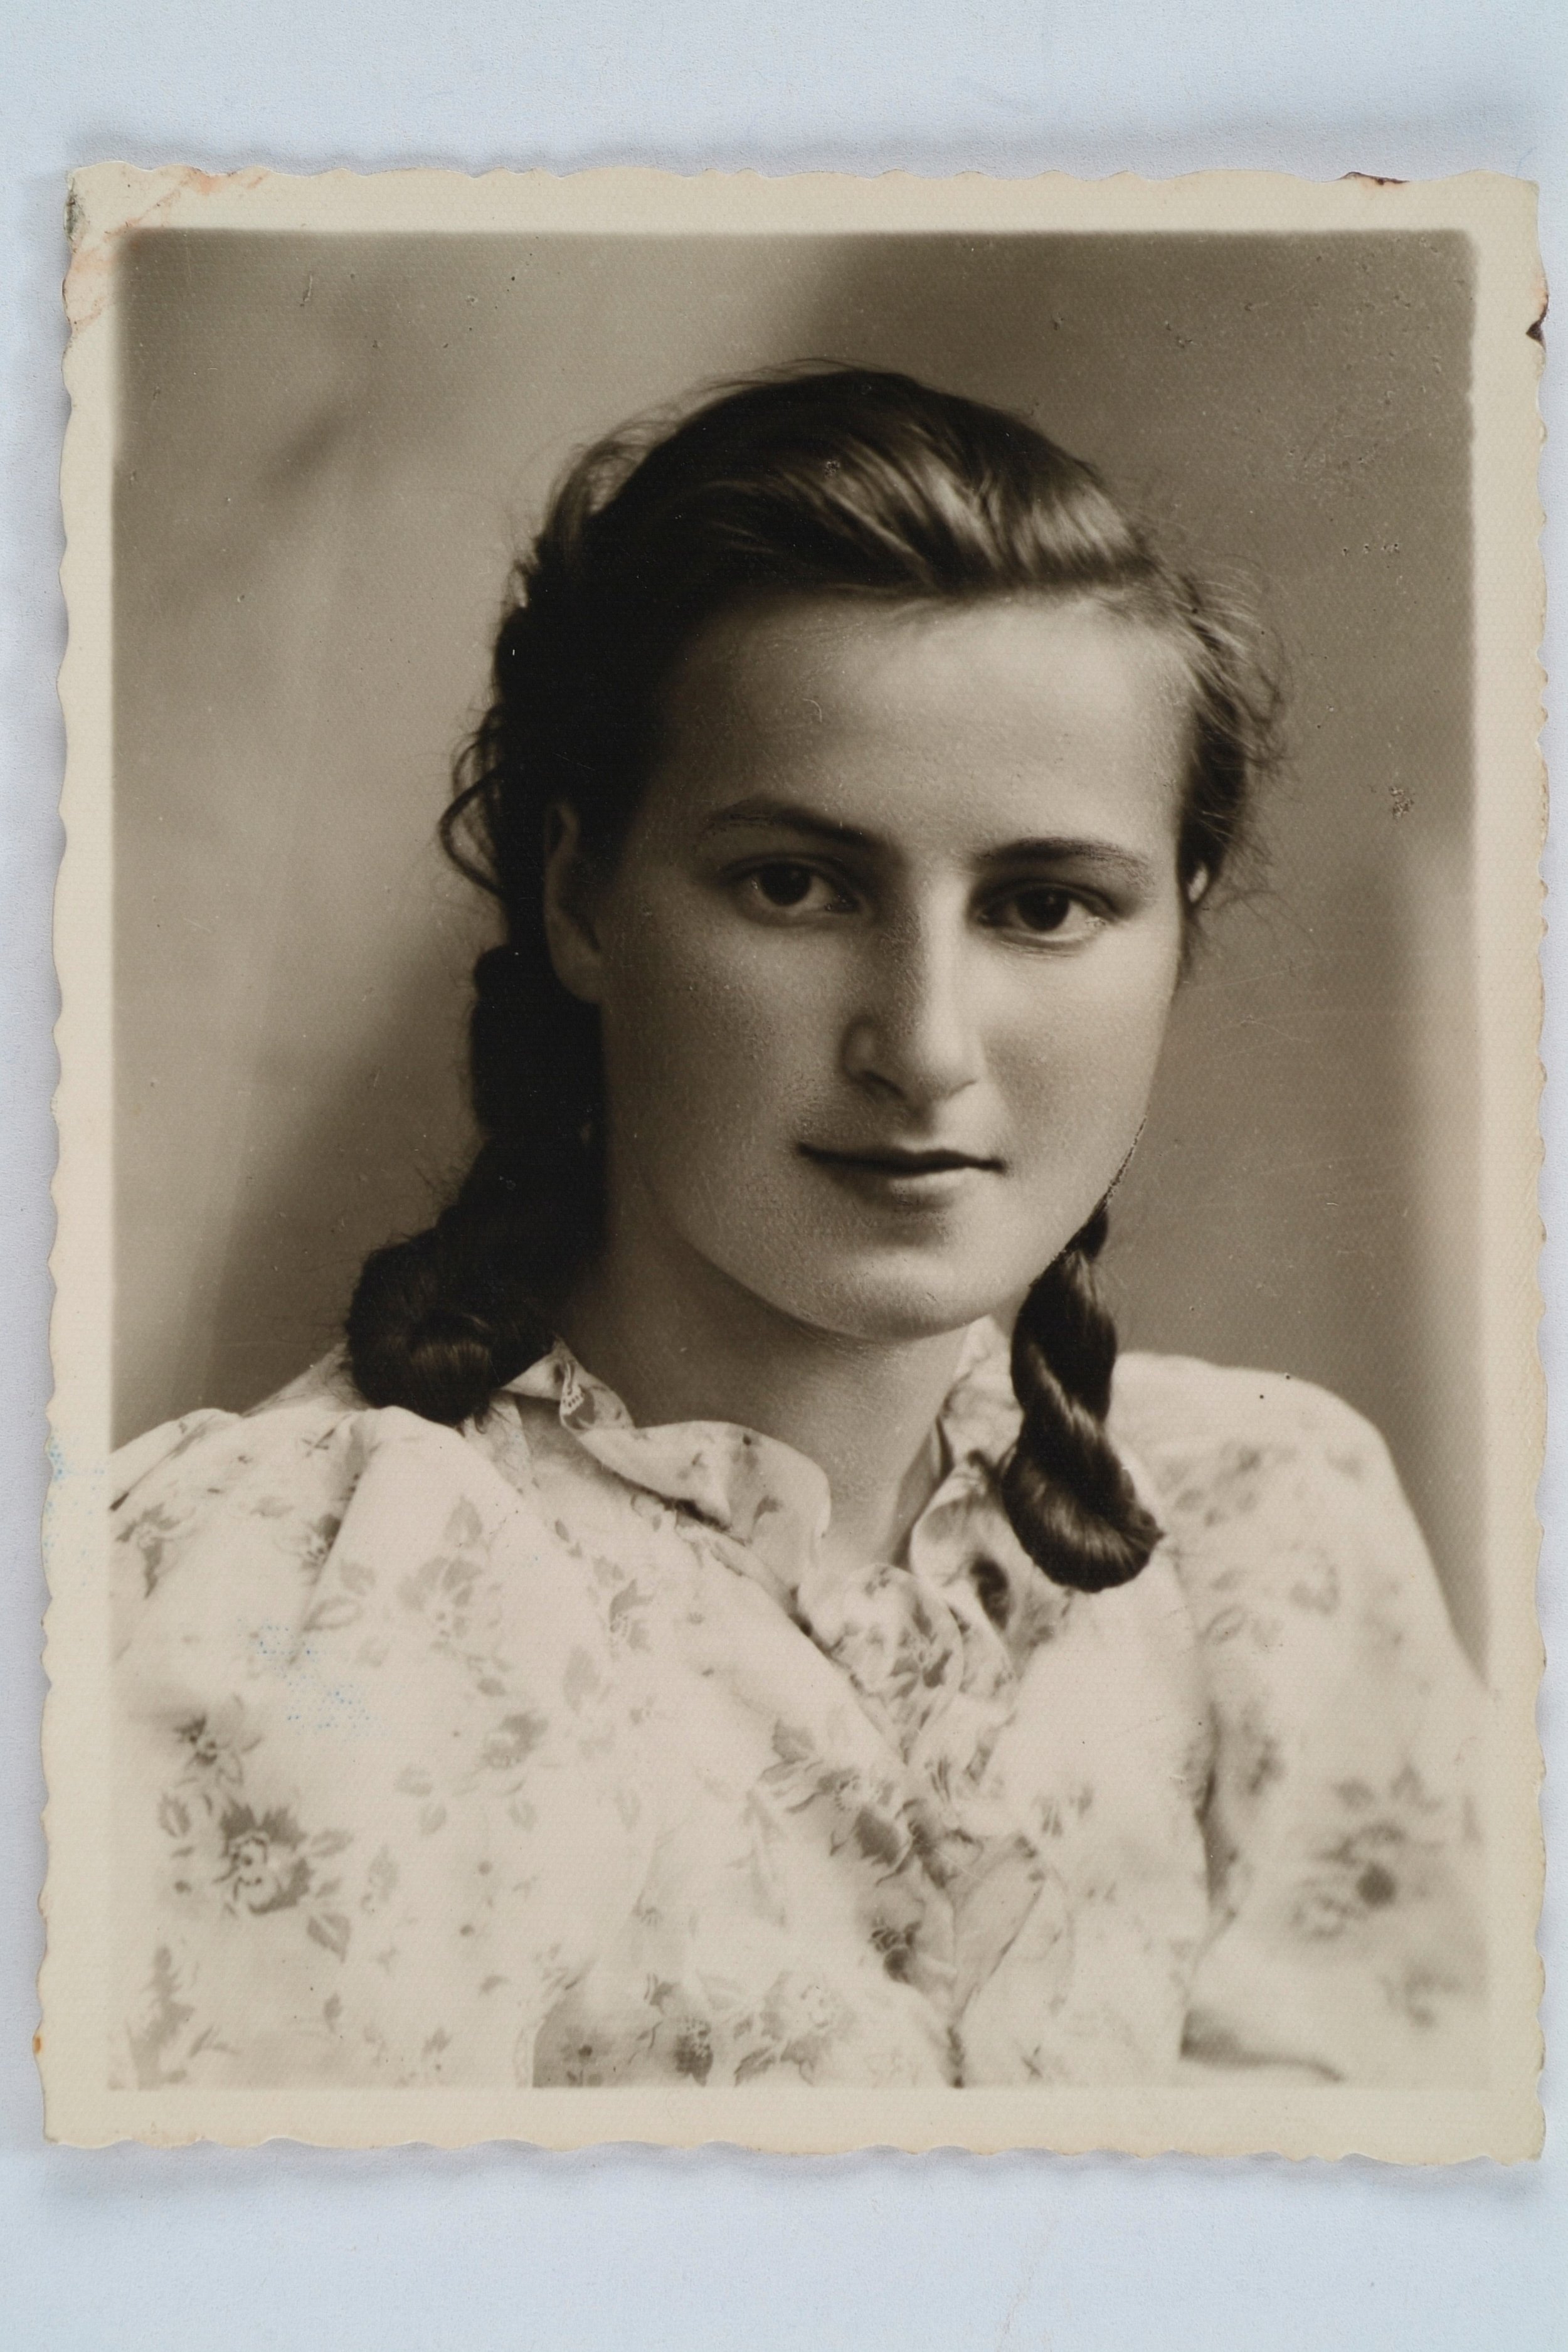 Wanda Poltawska as a young woman